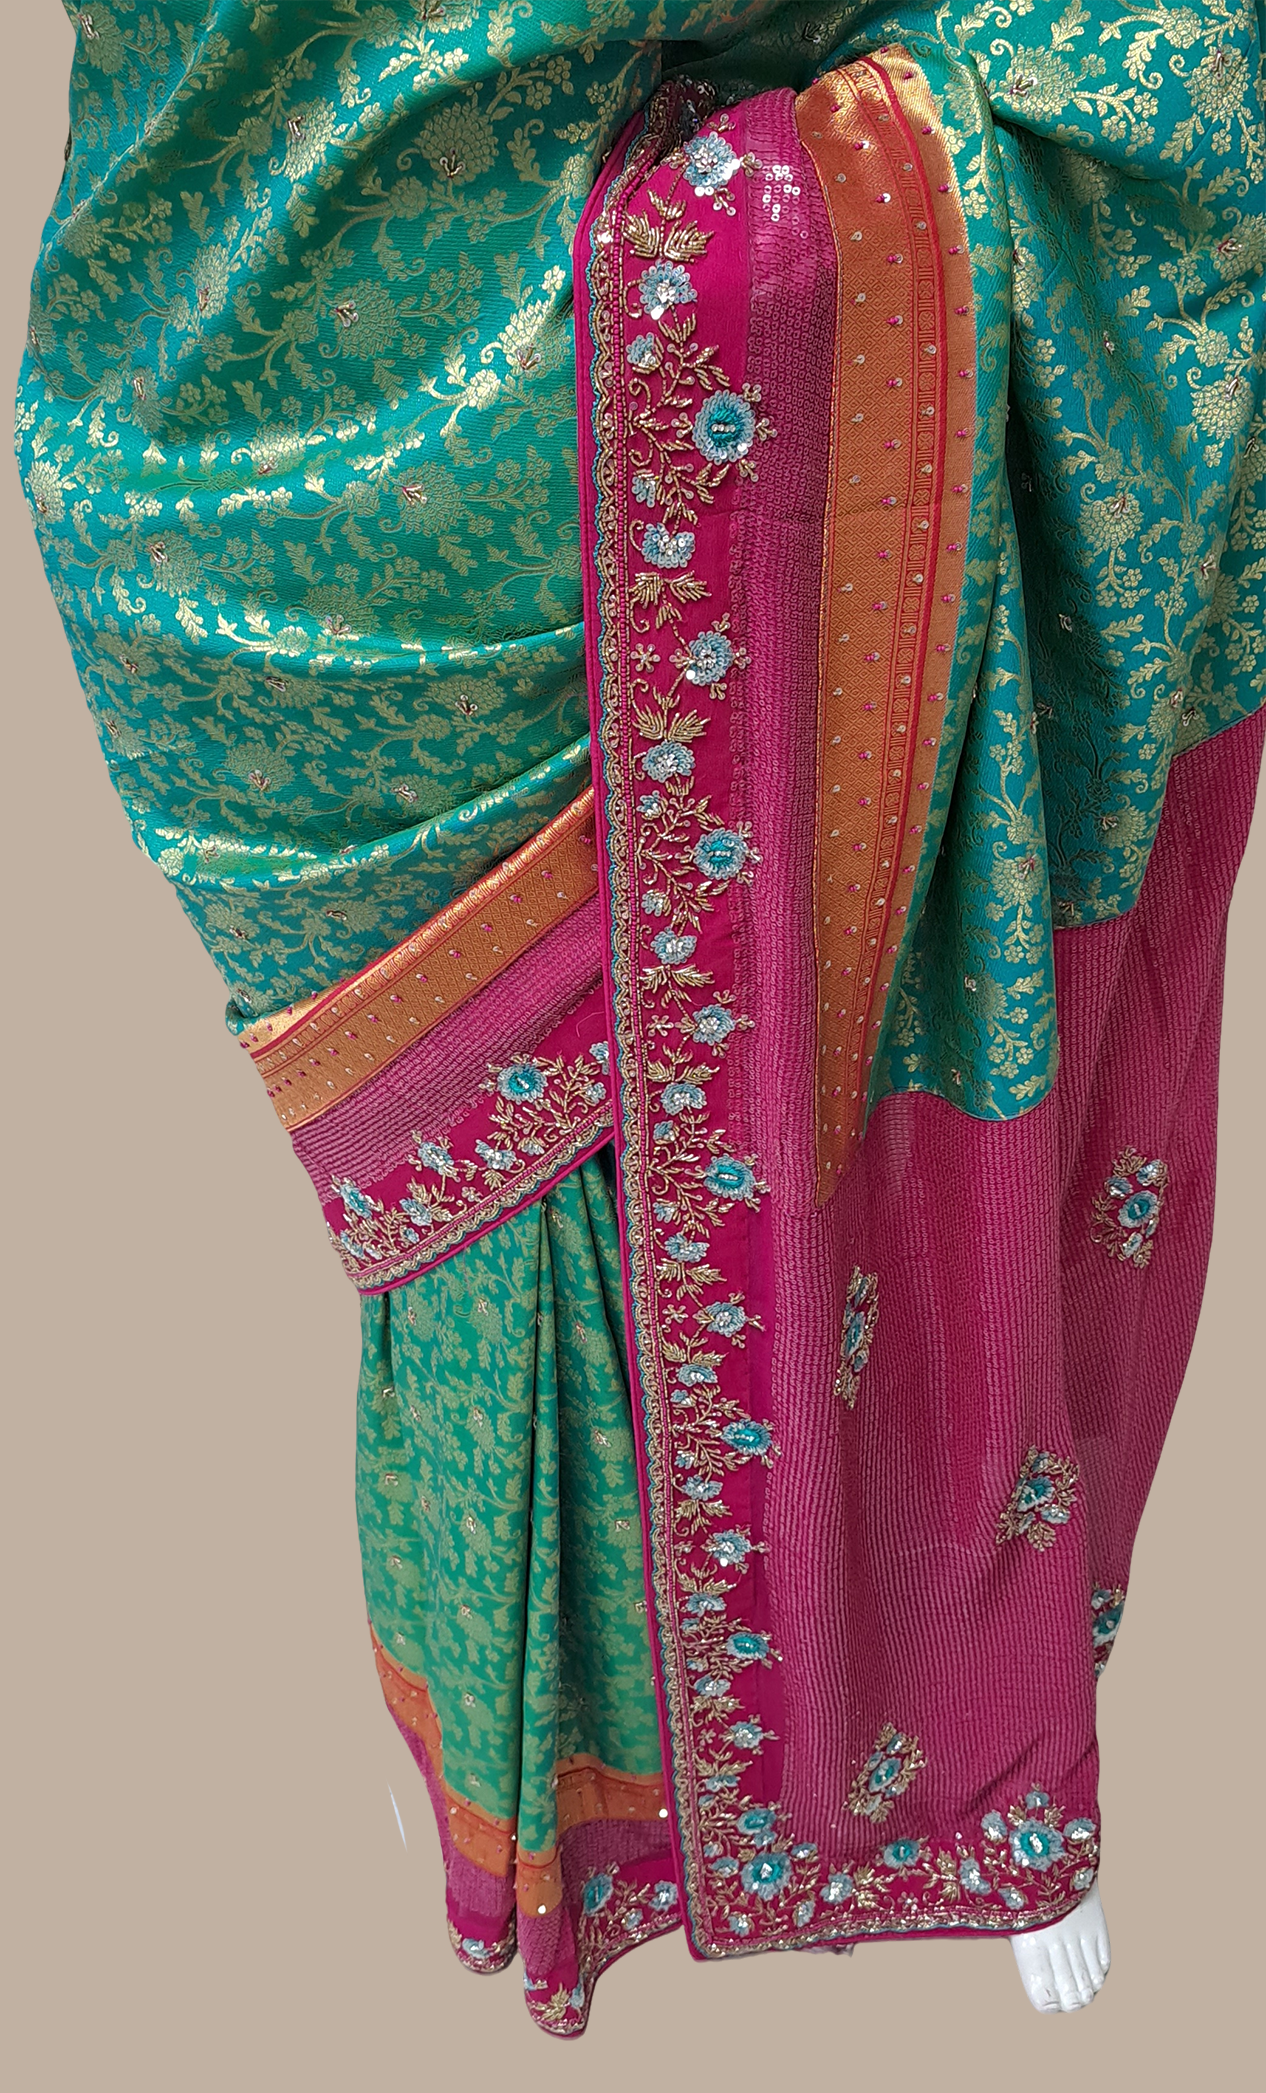 Teal Turquoise Embroidered Sari